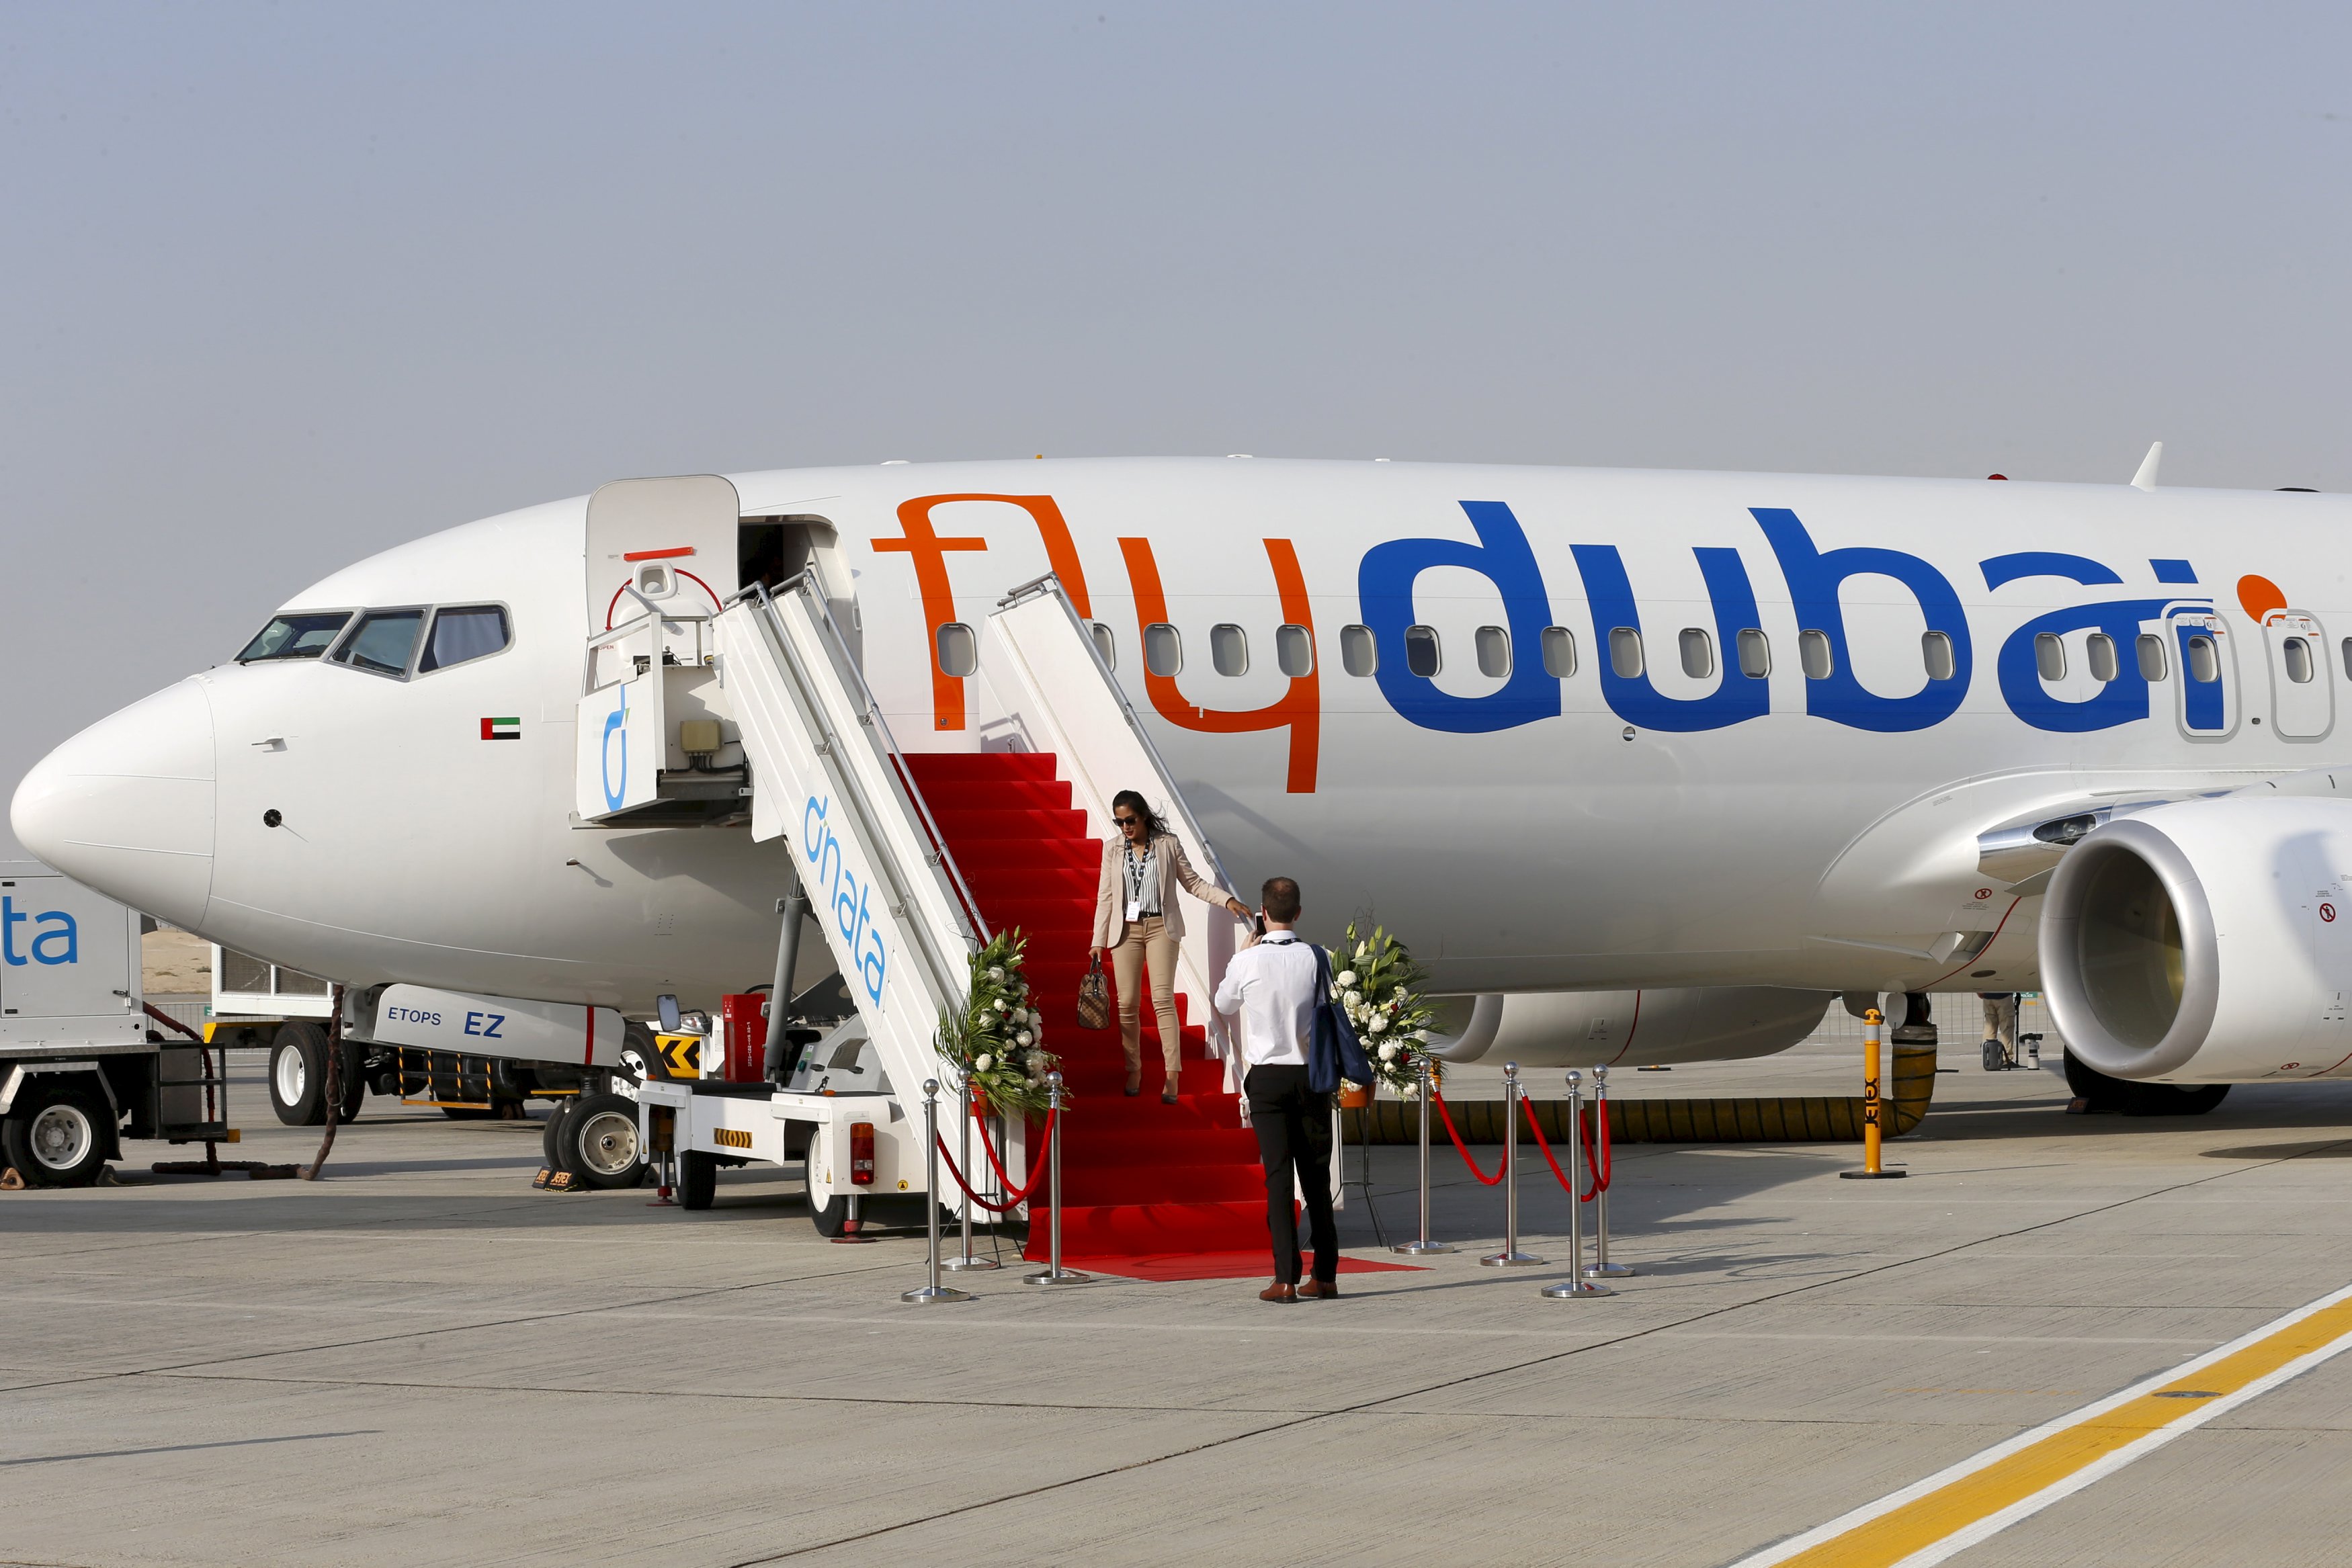 Russia says human error or technical failure two main theories for FlyDubai crash